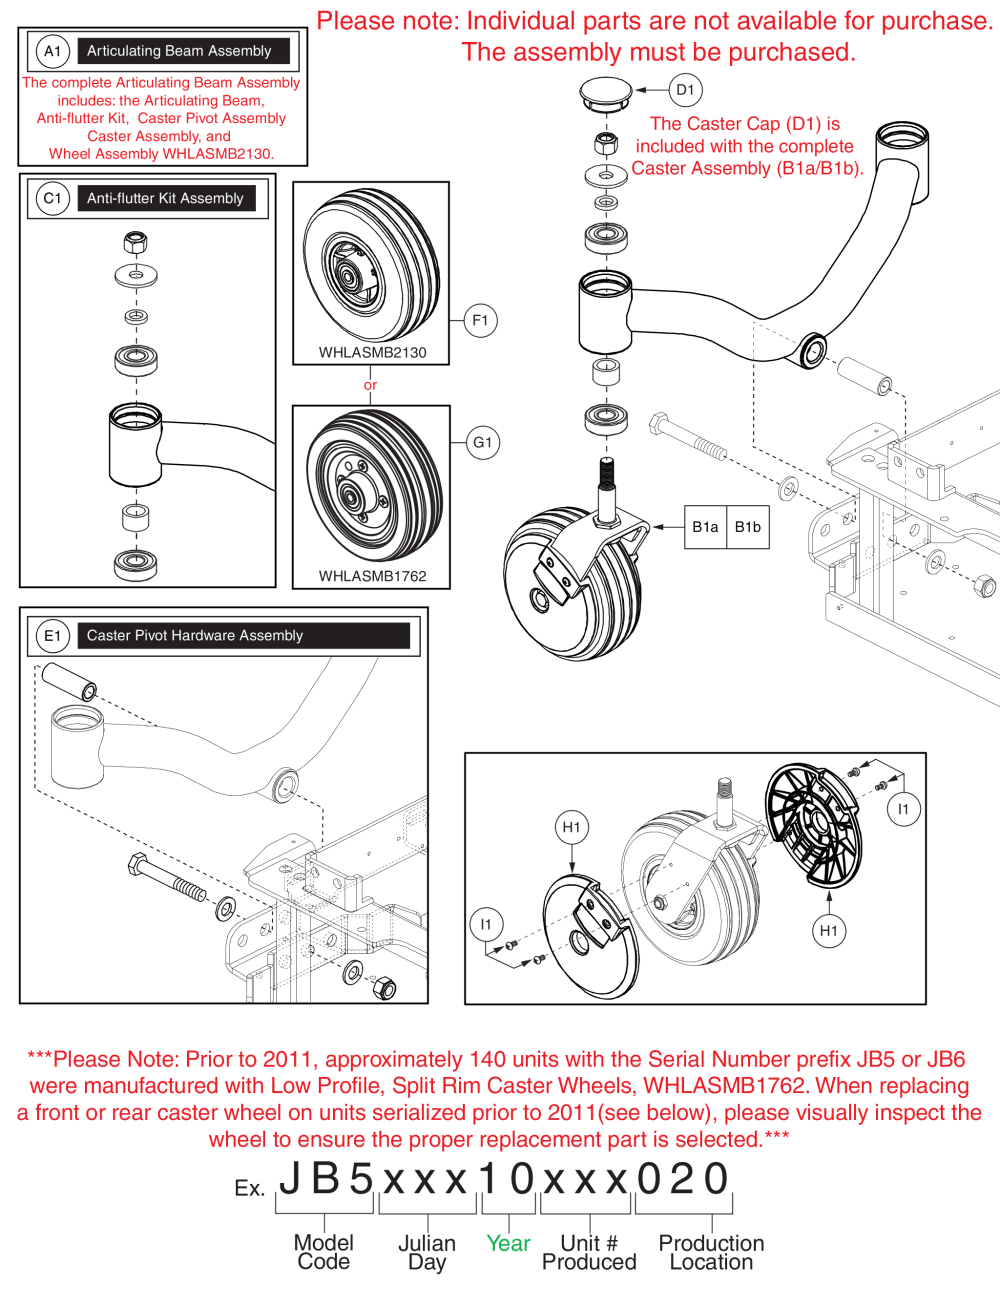 Articulating Beam Assy - One Piece Beam, 6” Casters, Q6 Edge parts diagram